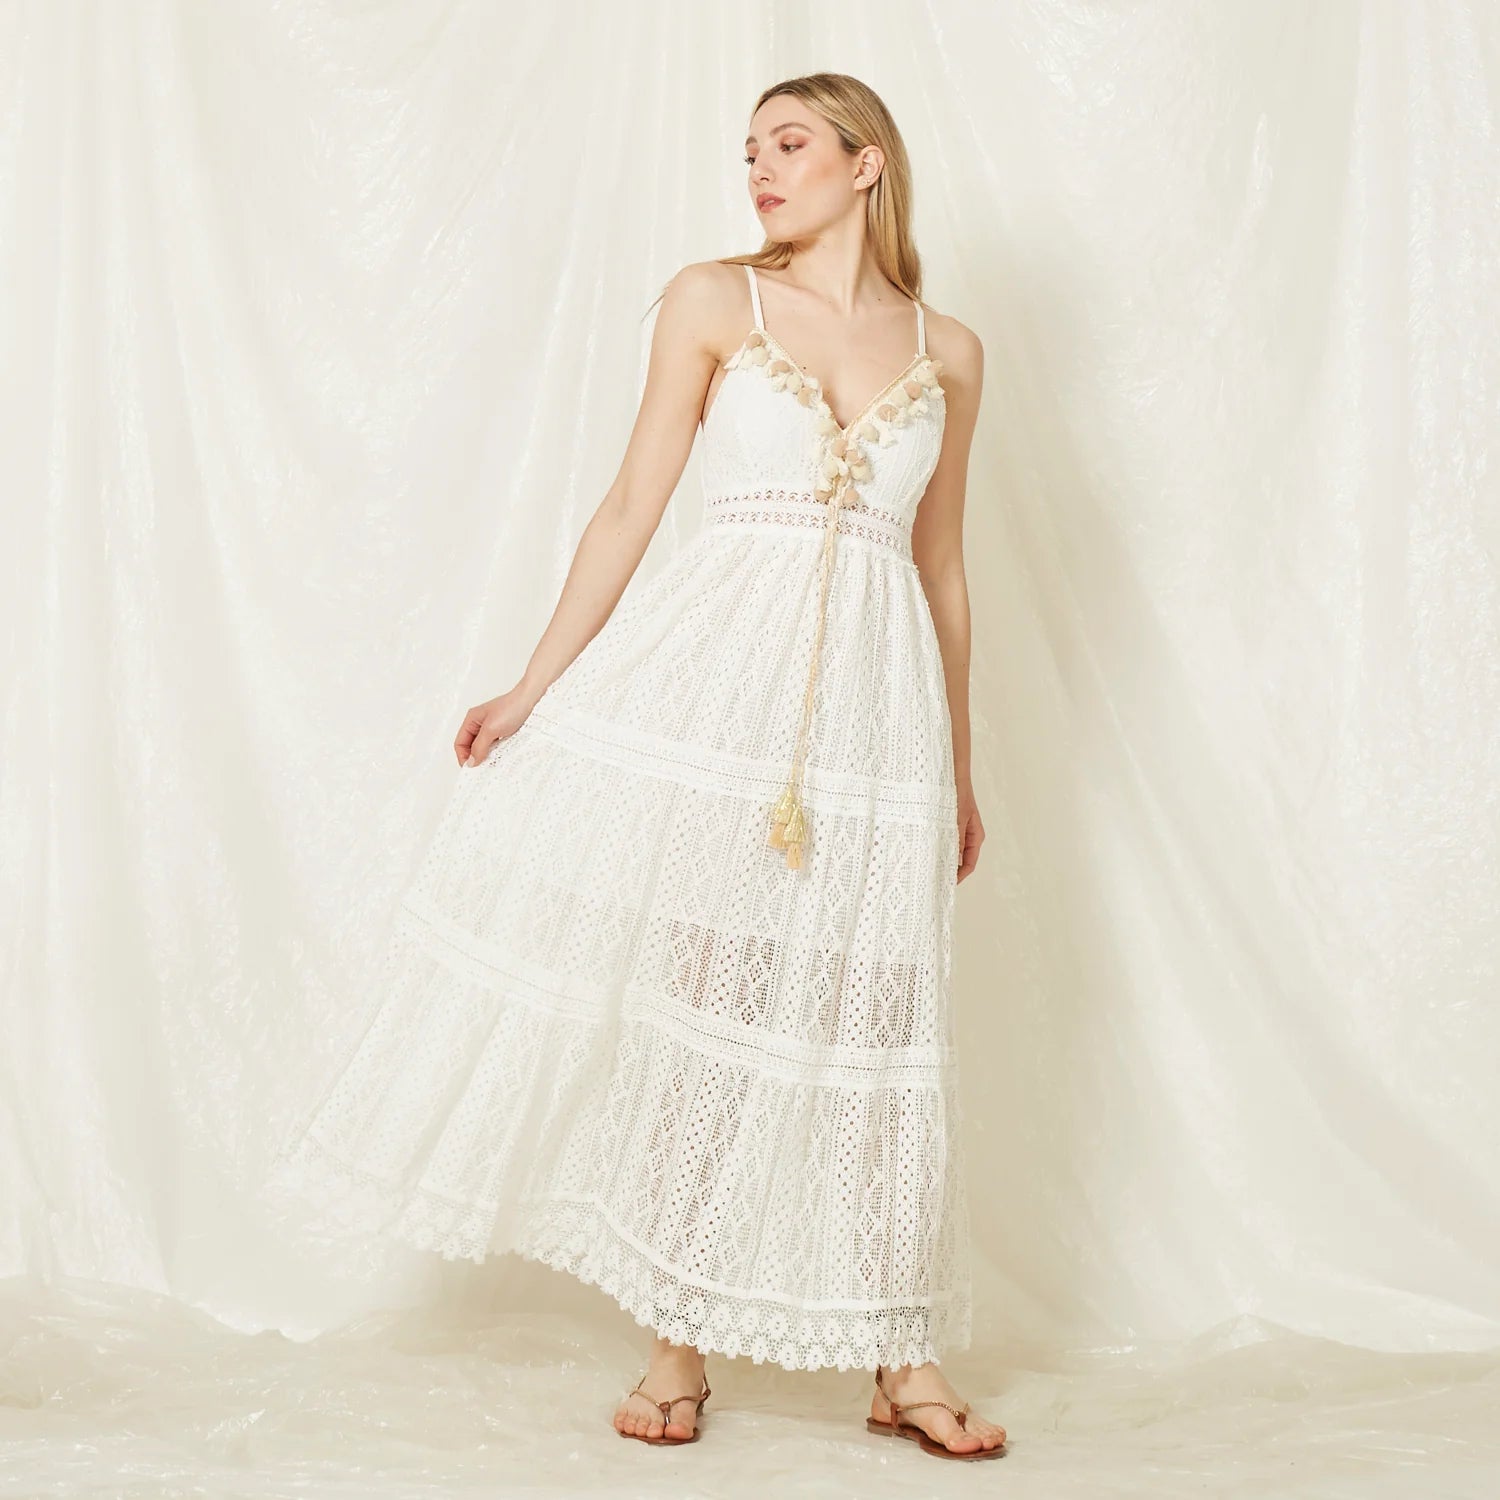 Do you white Dress Guardaroba Style